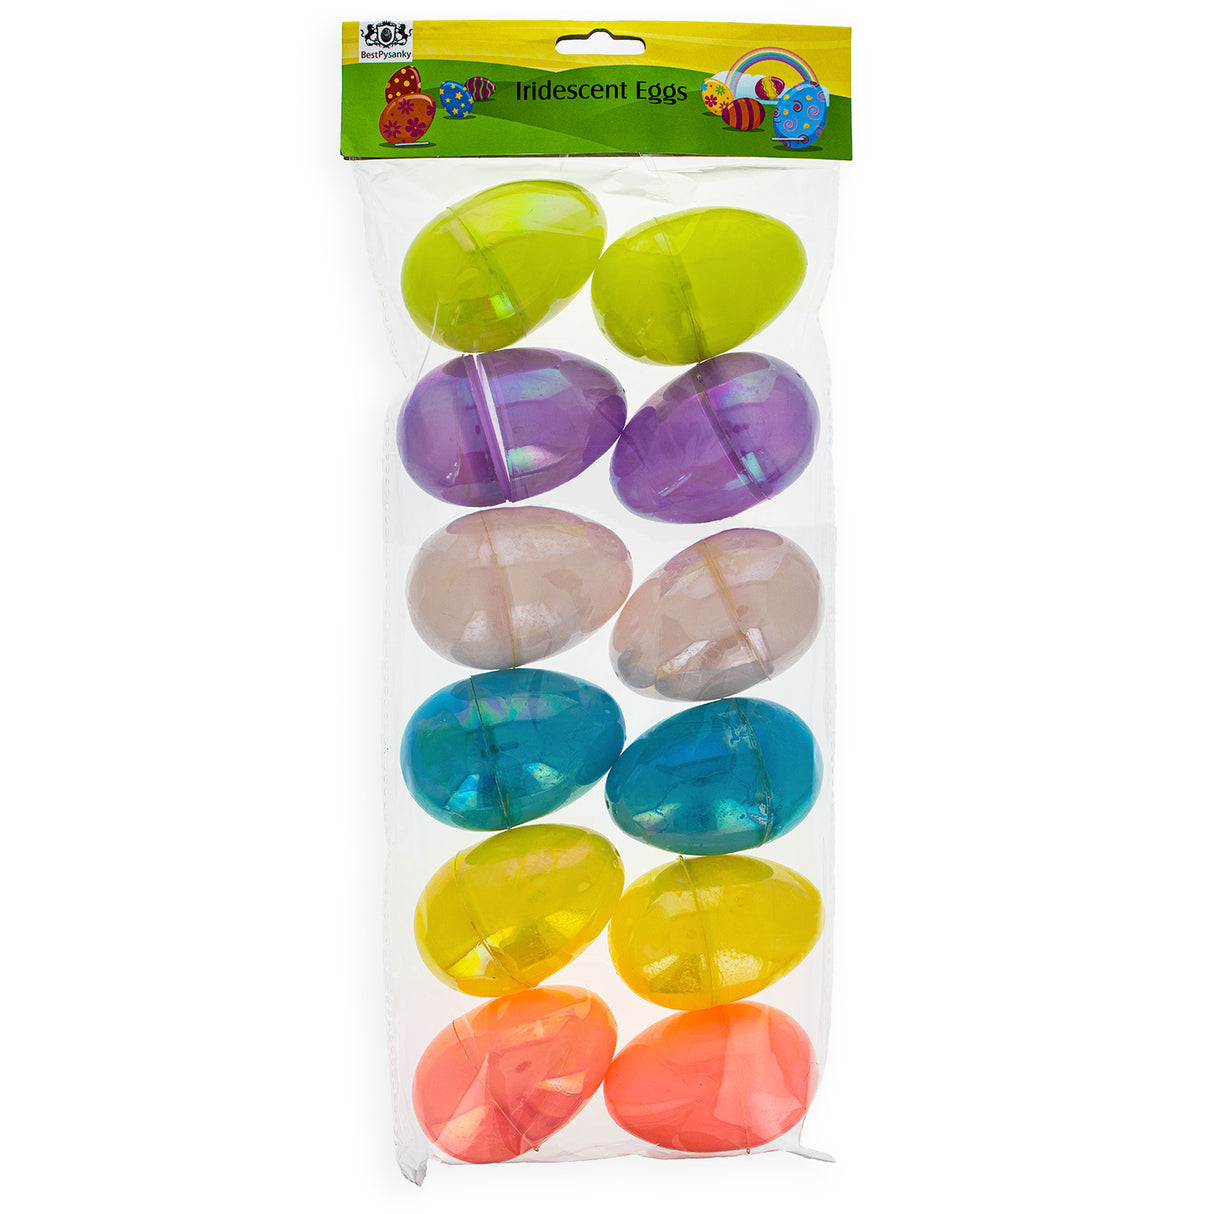 BestPysanky online gift shop sells plastic eggs, easter eggs bulk, Easter decor, plastic eggs easter, egg hunt, Easter decorations, decorative